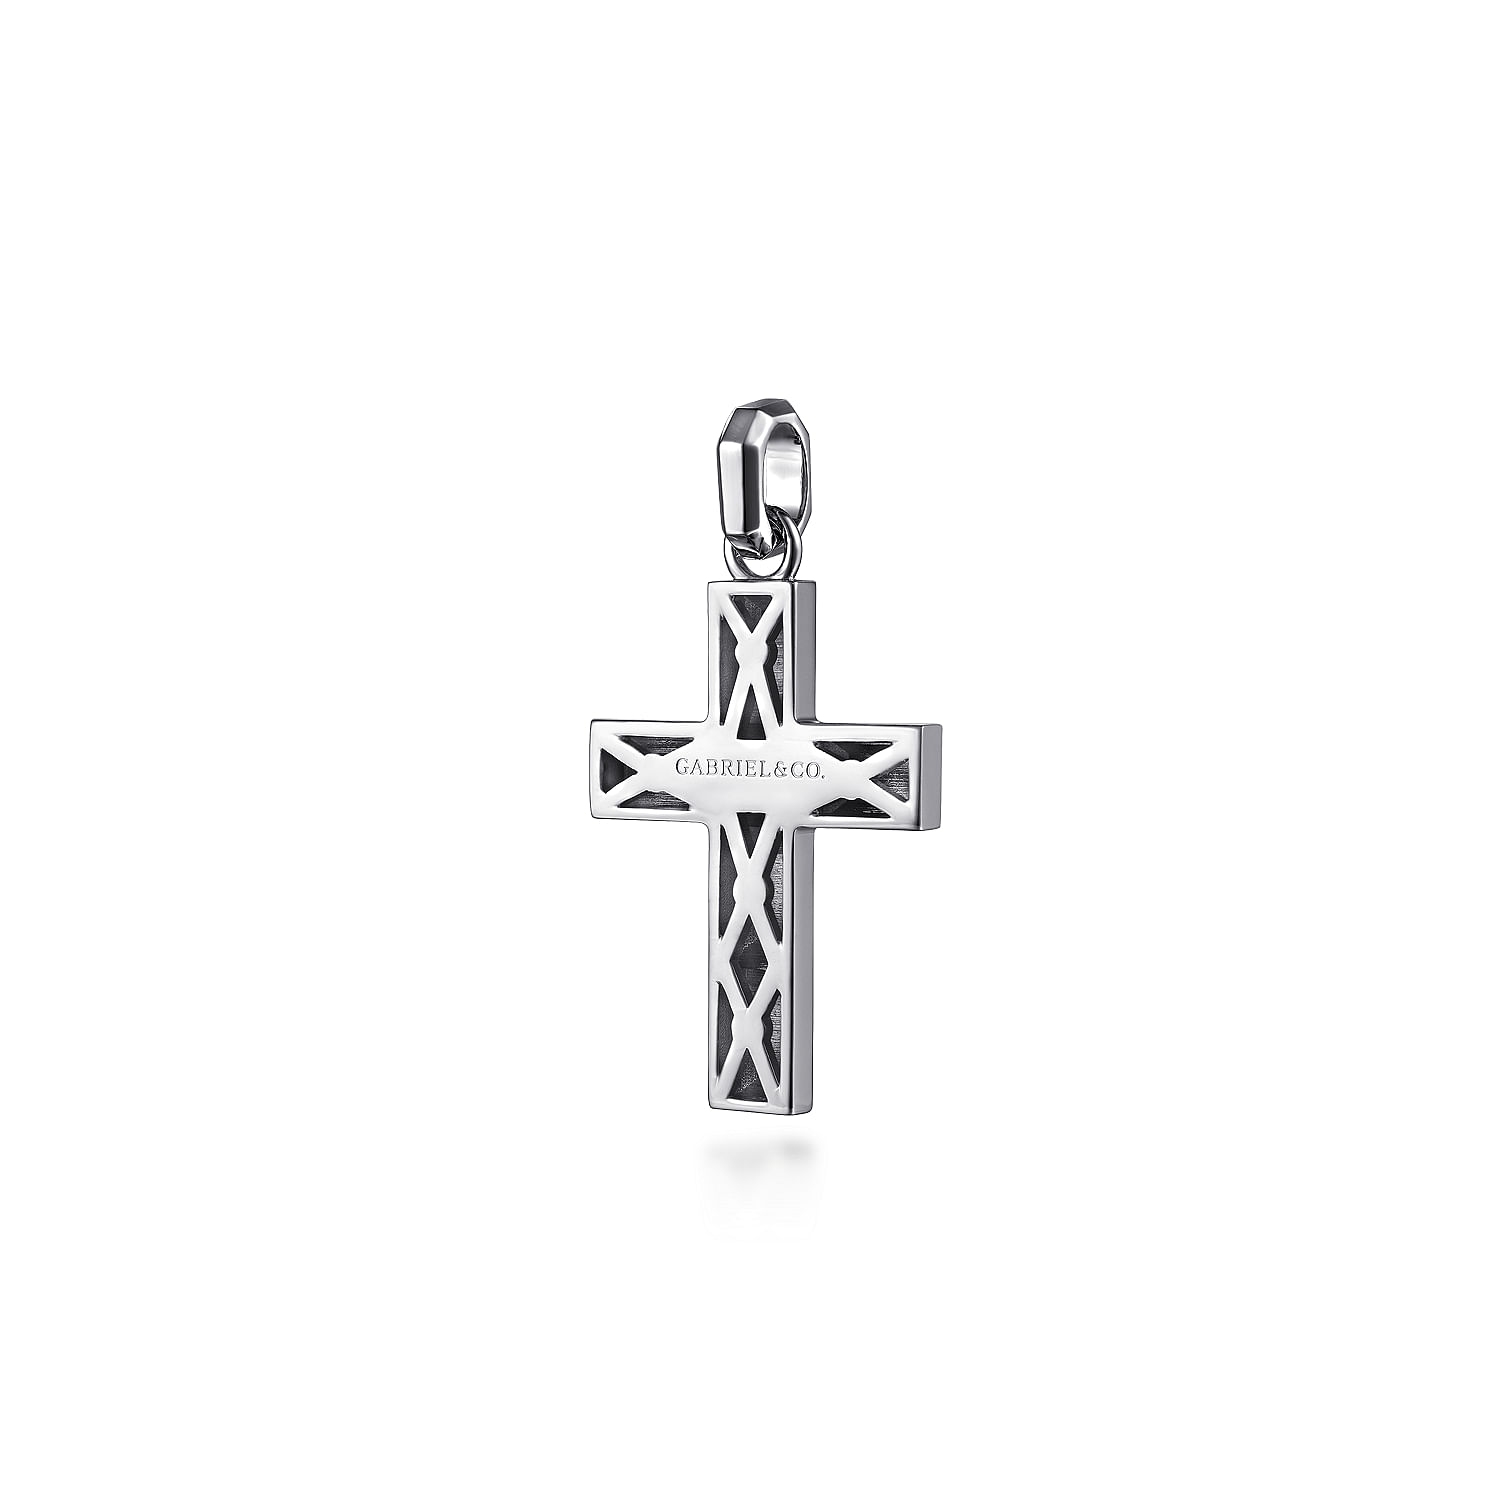 925 Sterling Silver Geometric Cross Pendant